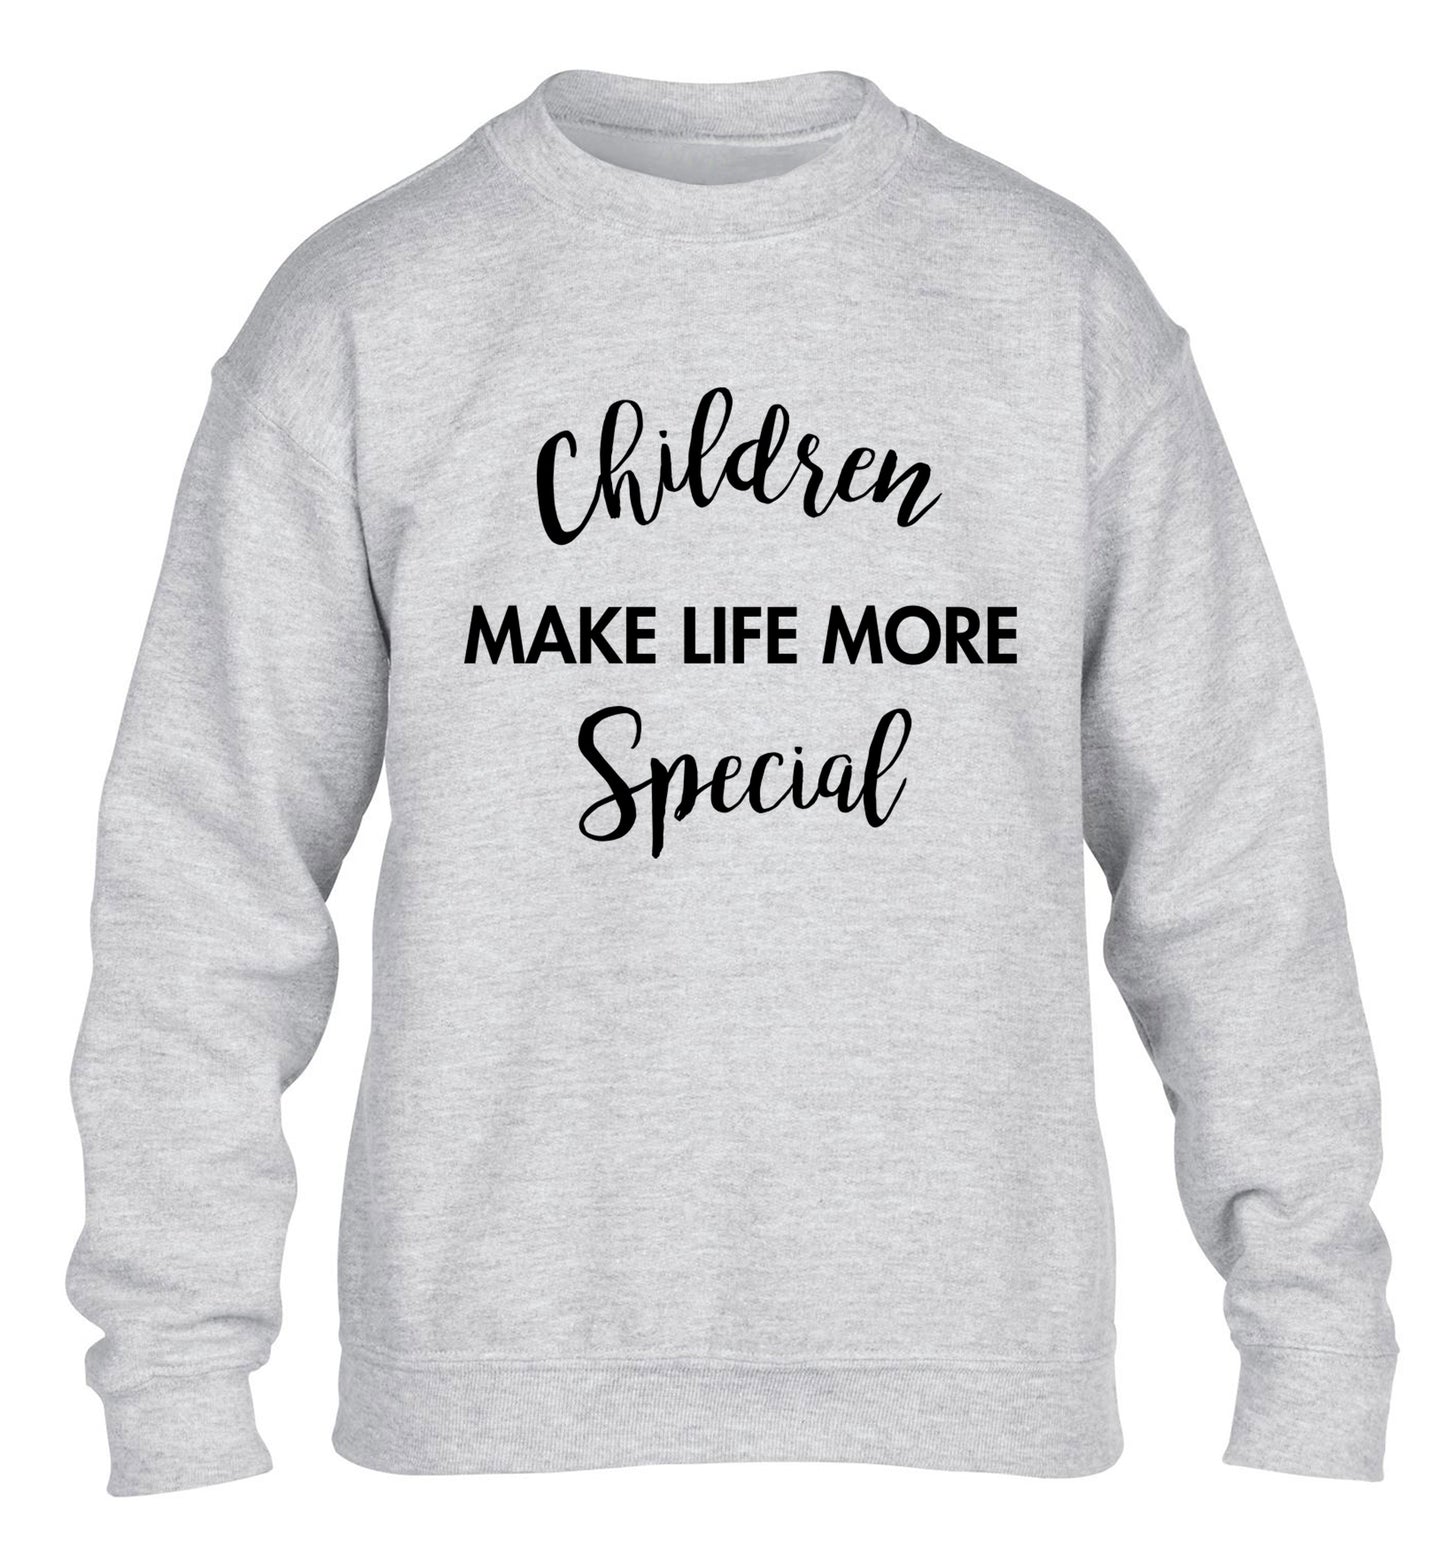 Children make life more special children's grey sweater 12-14 Years